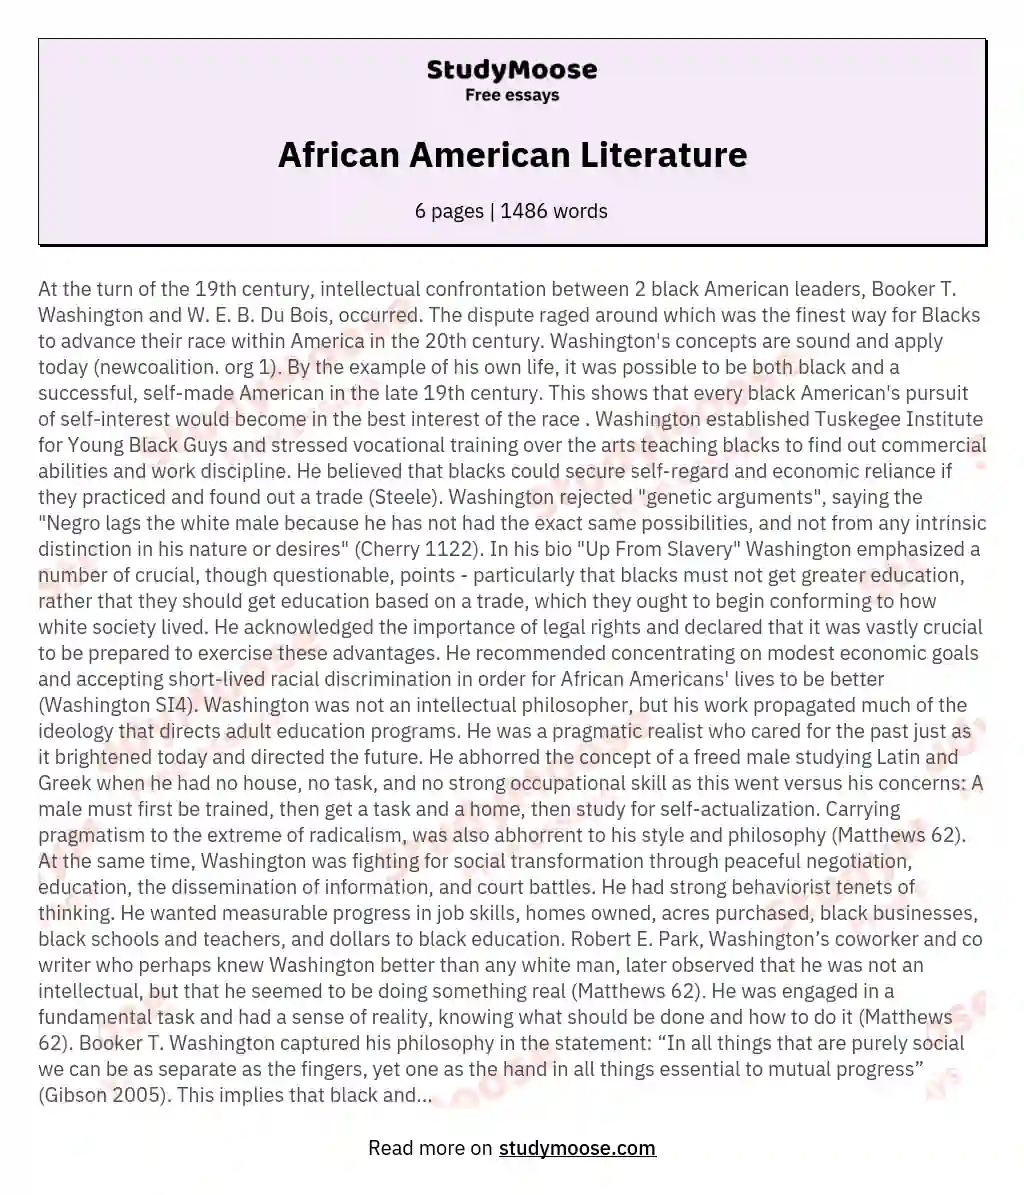 African American Literature essay